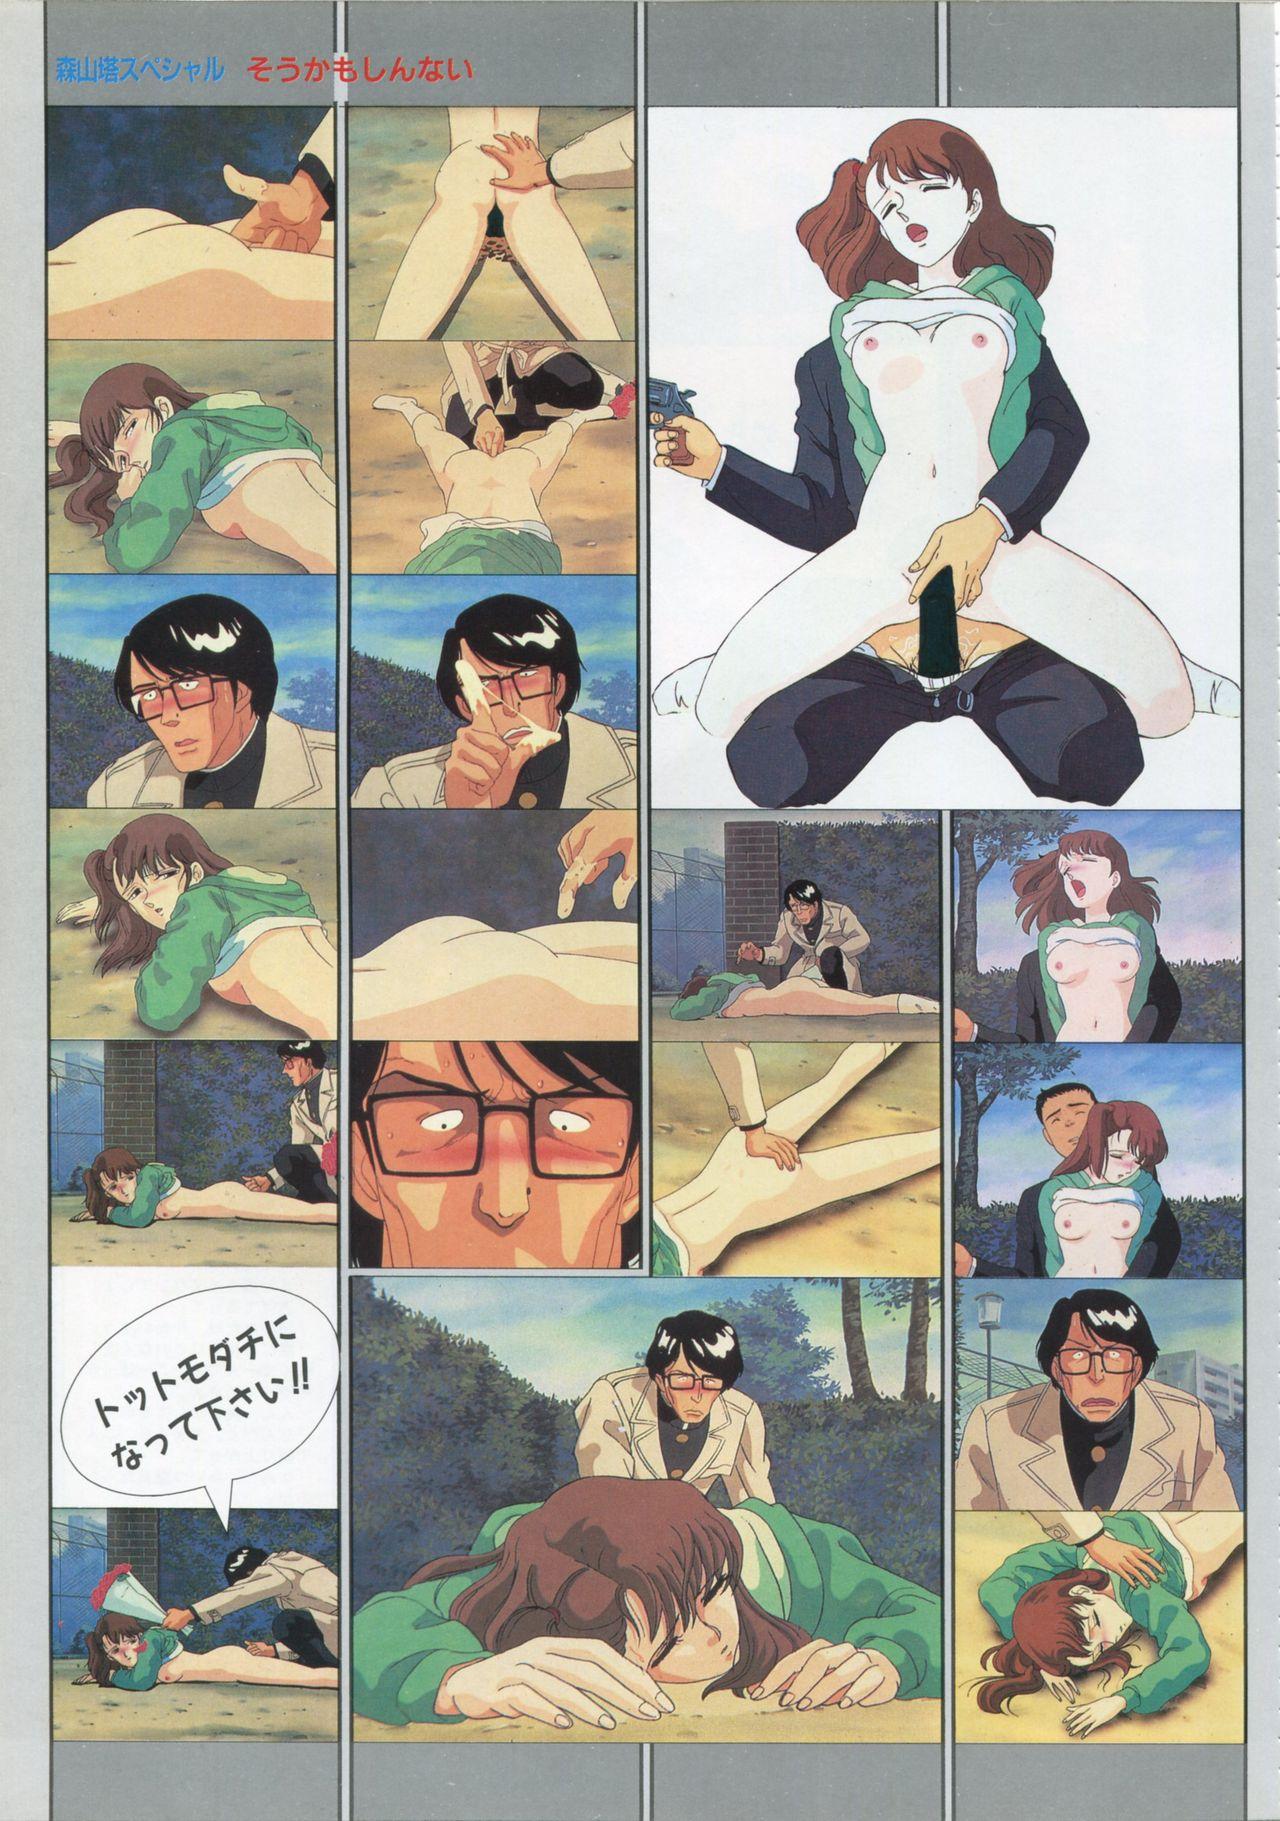 Bishoujo Anime Daizenshuu - Adult Animation Video Catalog 1991 28